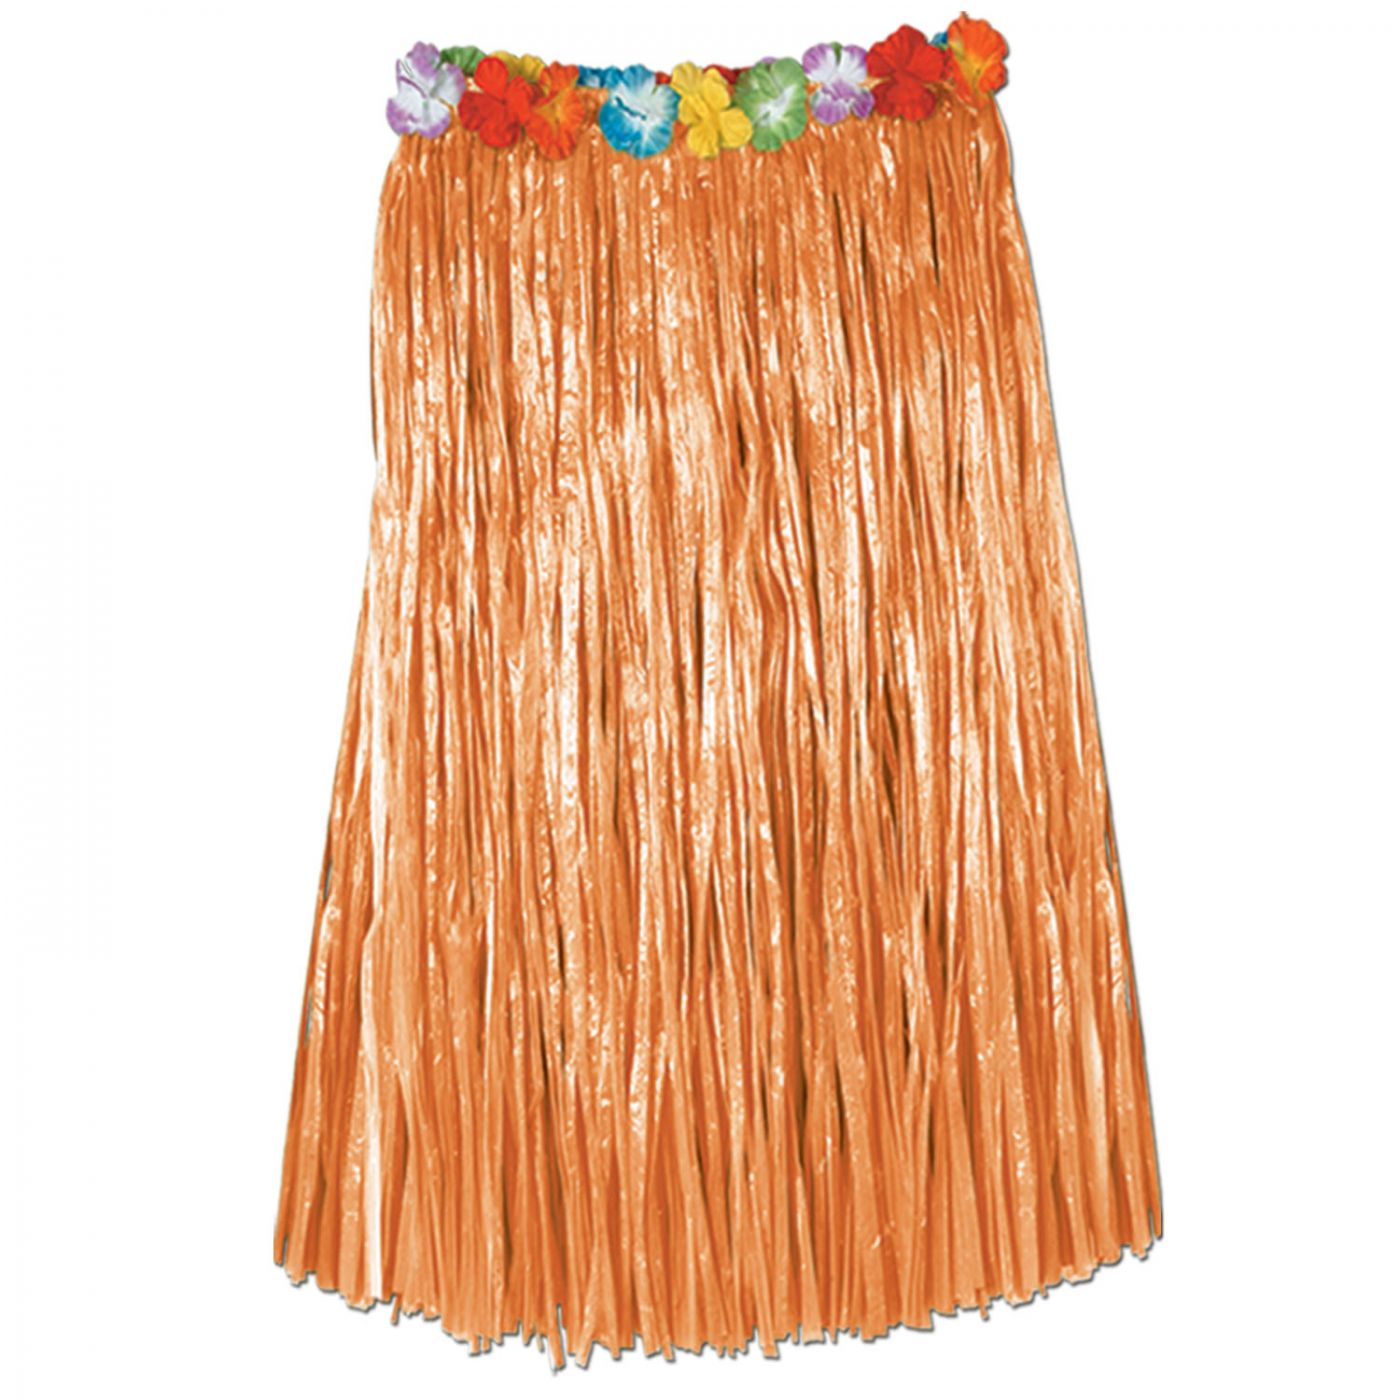 Adult Artificial Grass Hula Skirt (12) image